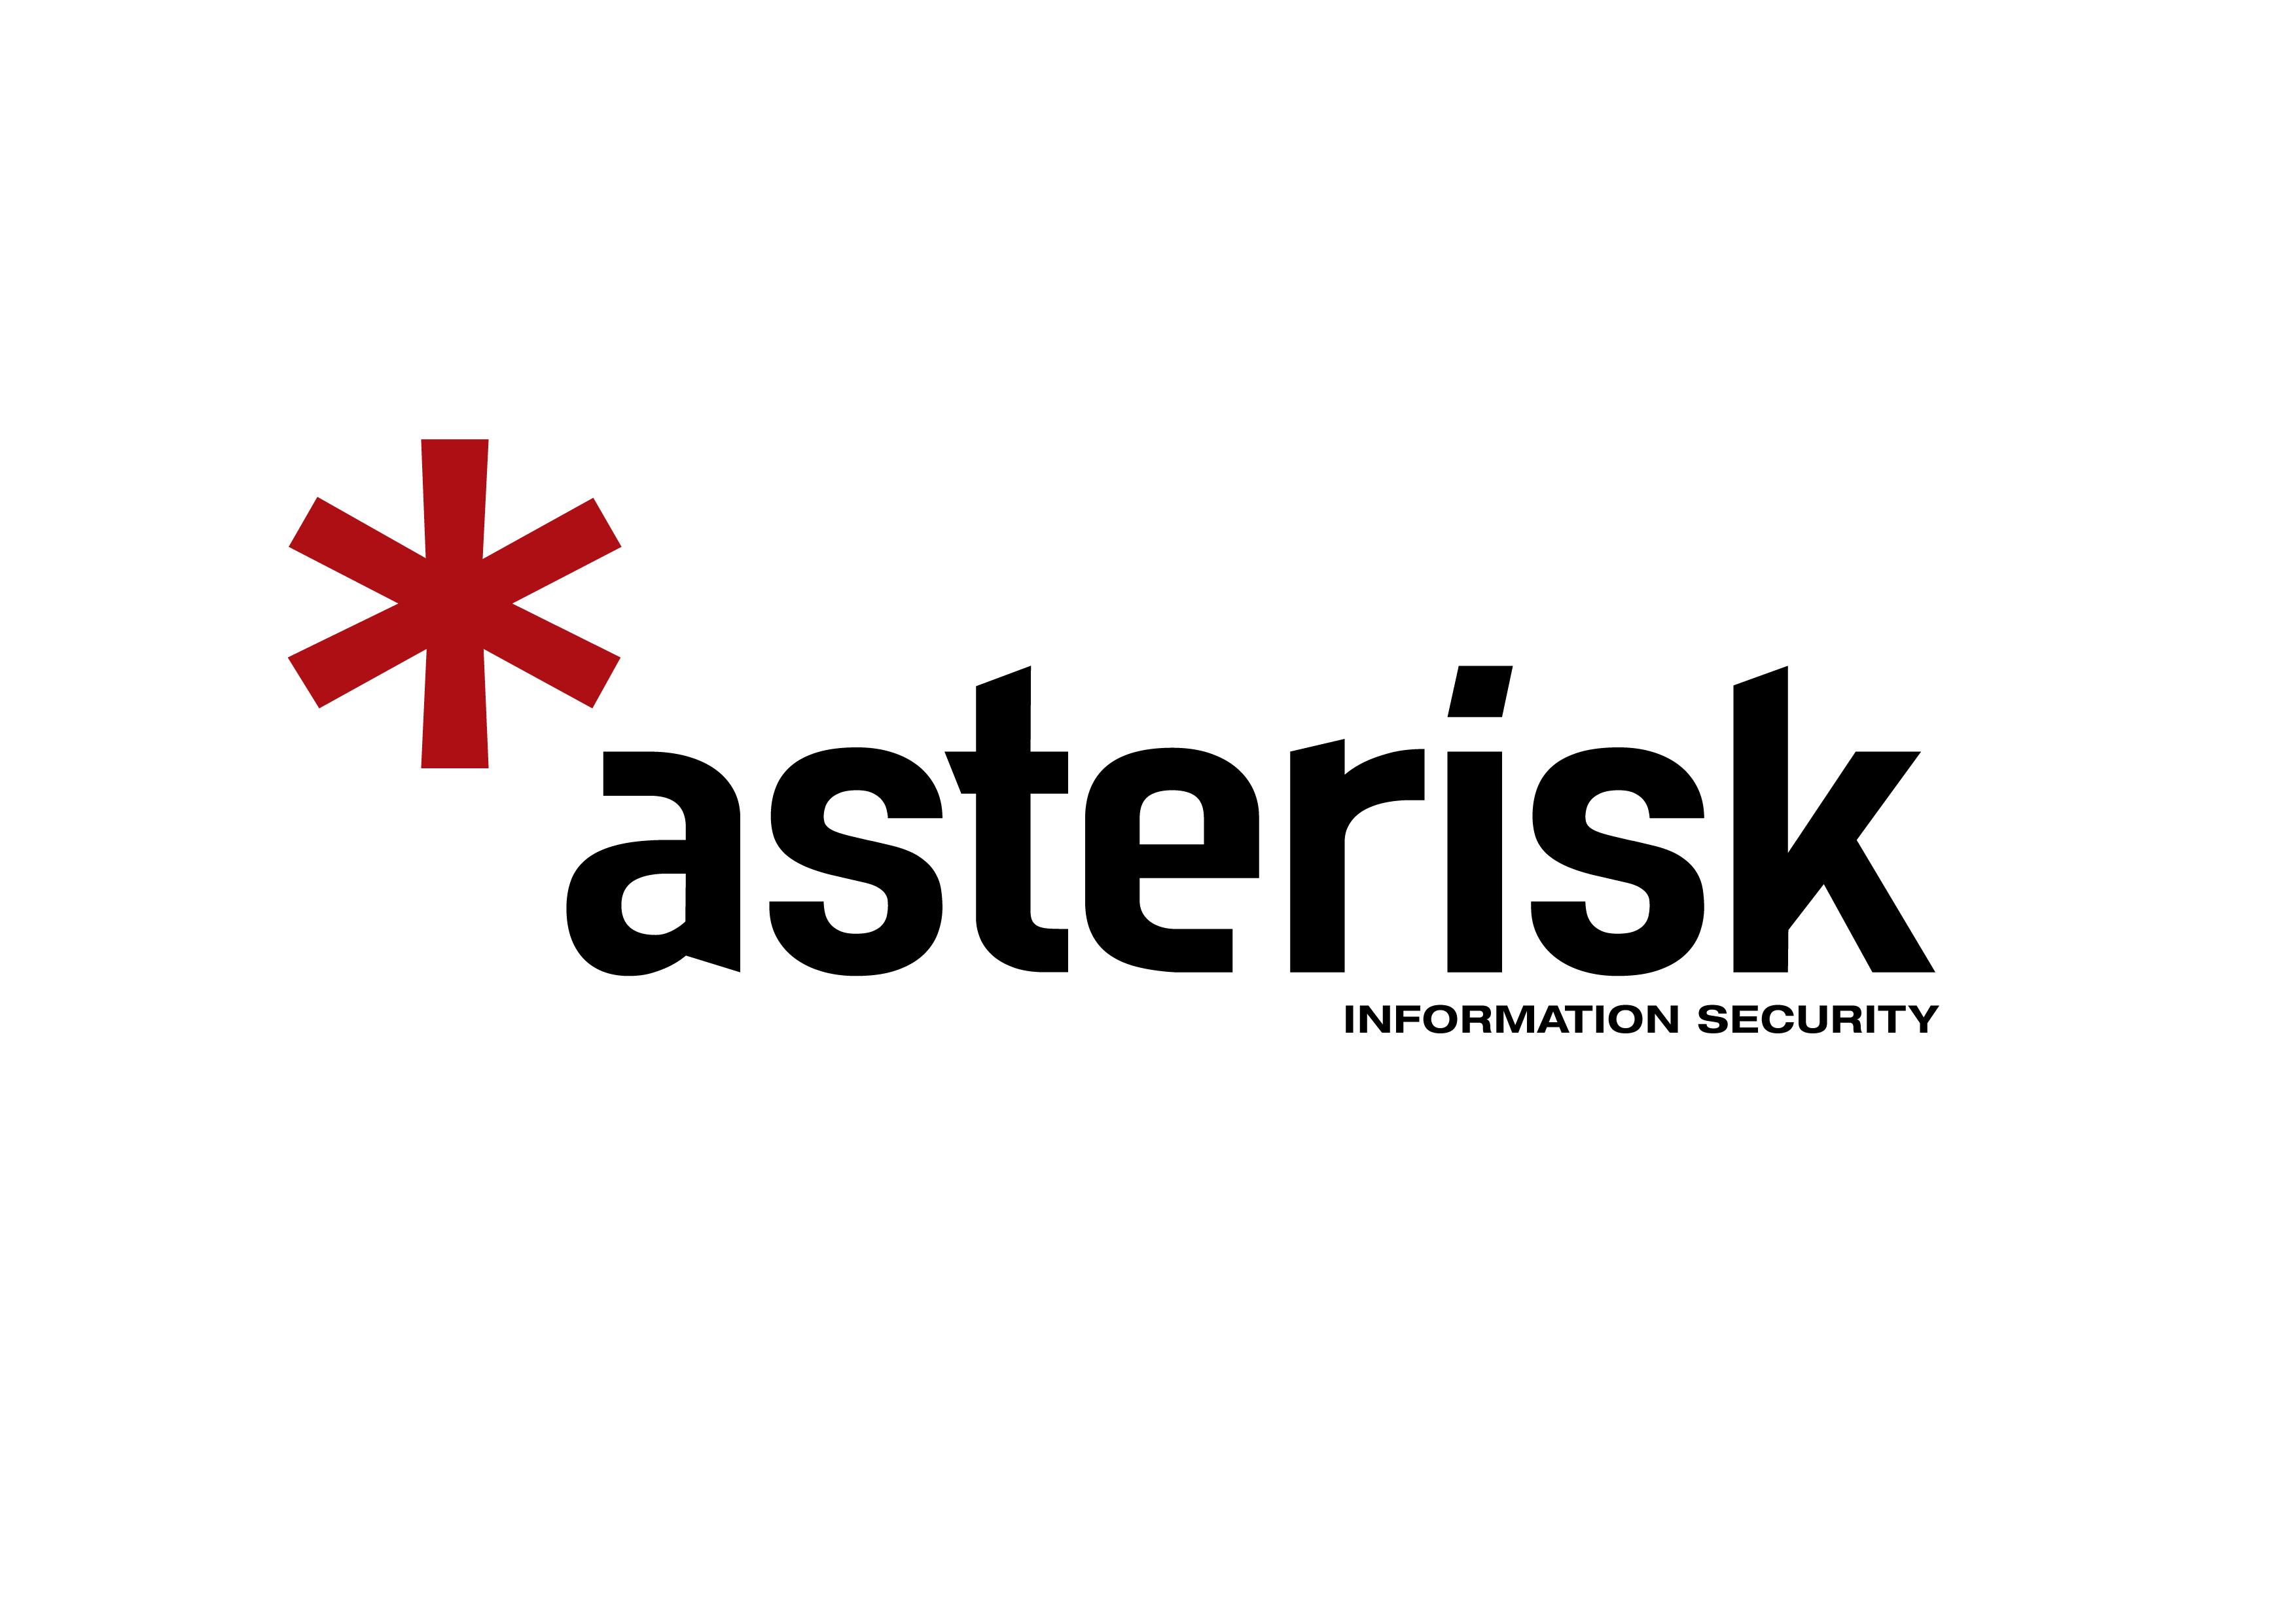 Asterisk Information Security